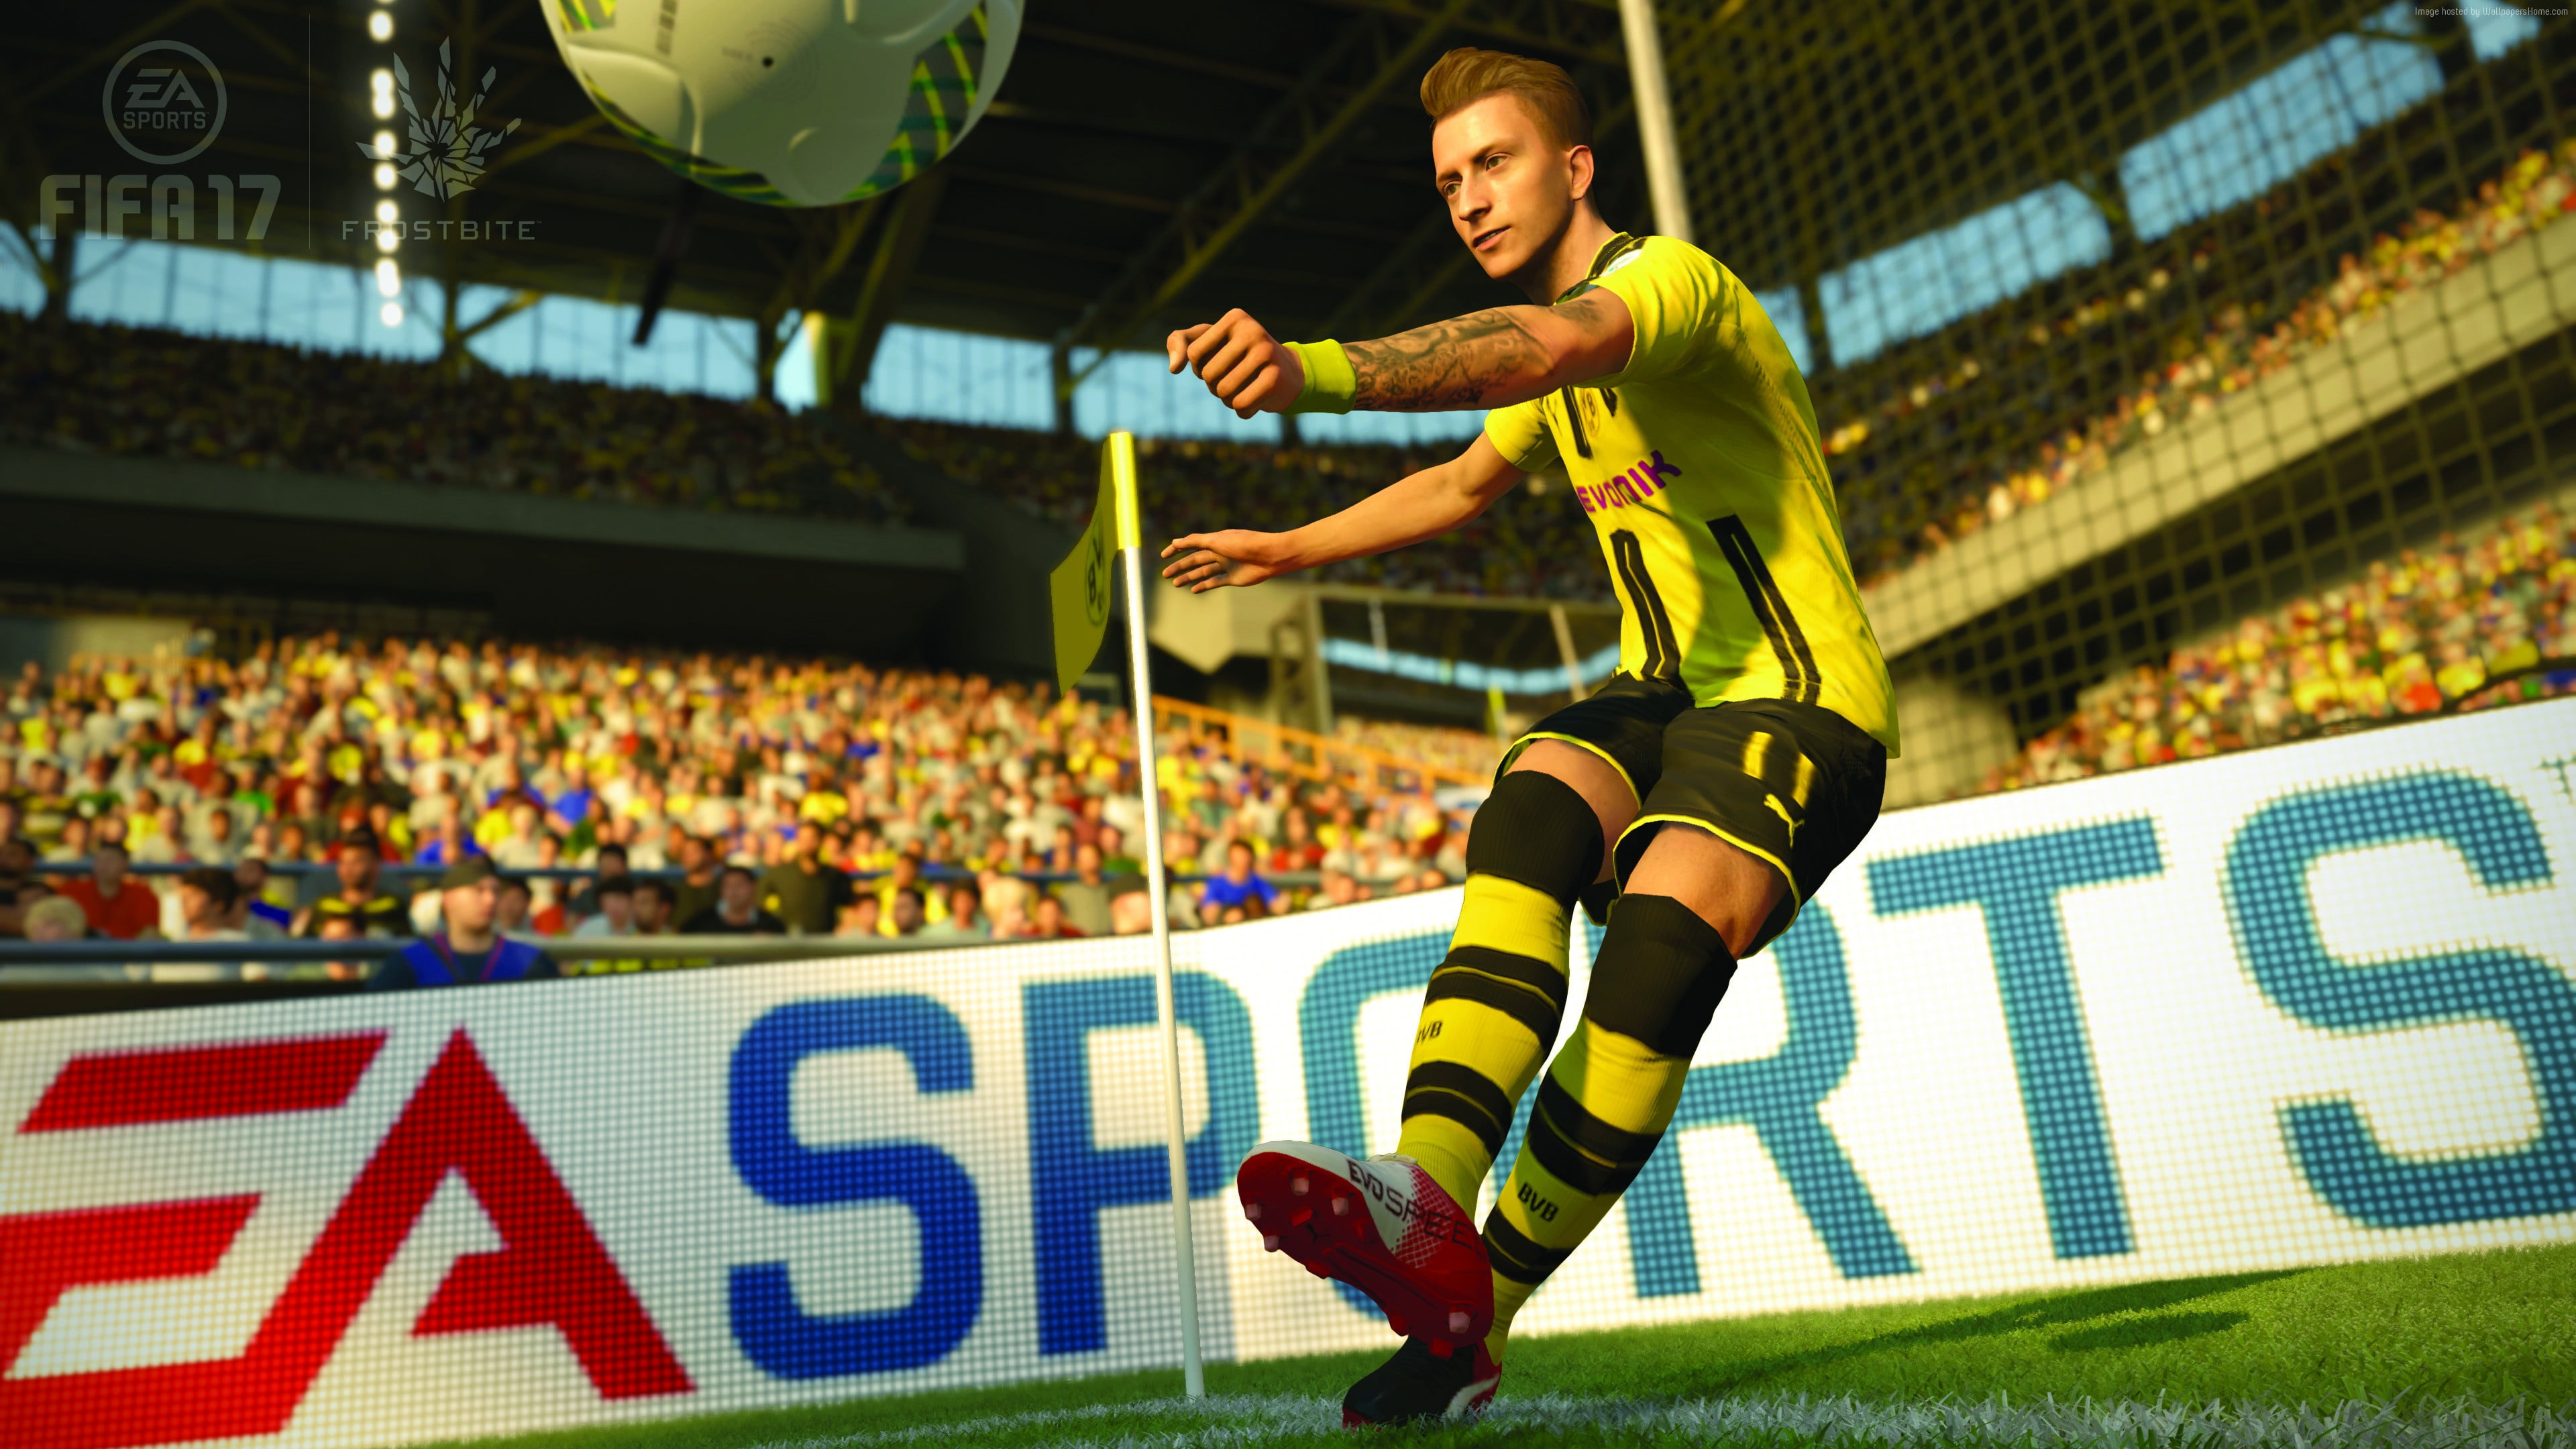 EA Sports soccer game